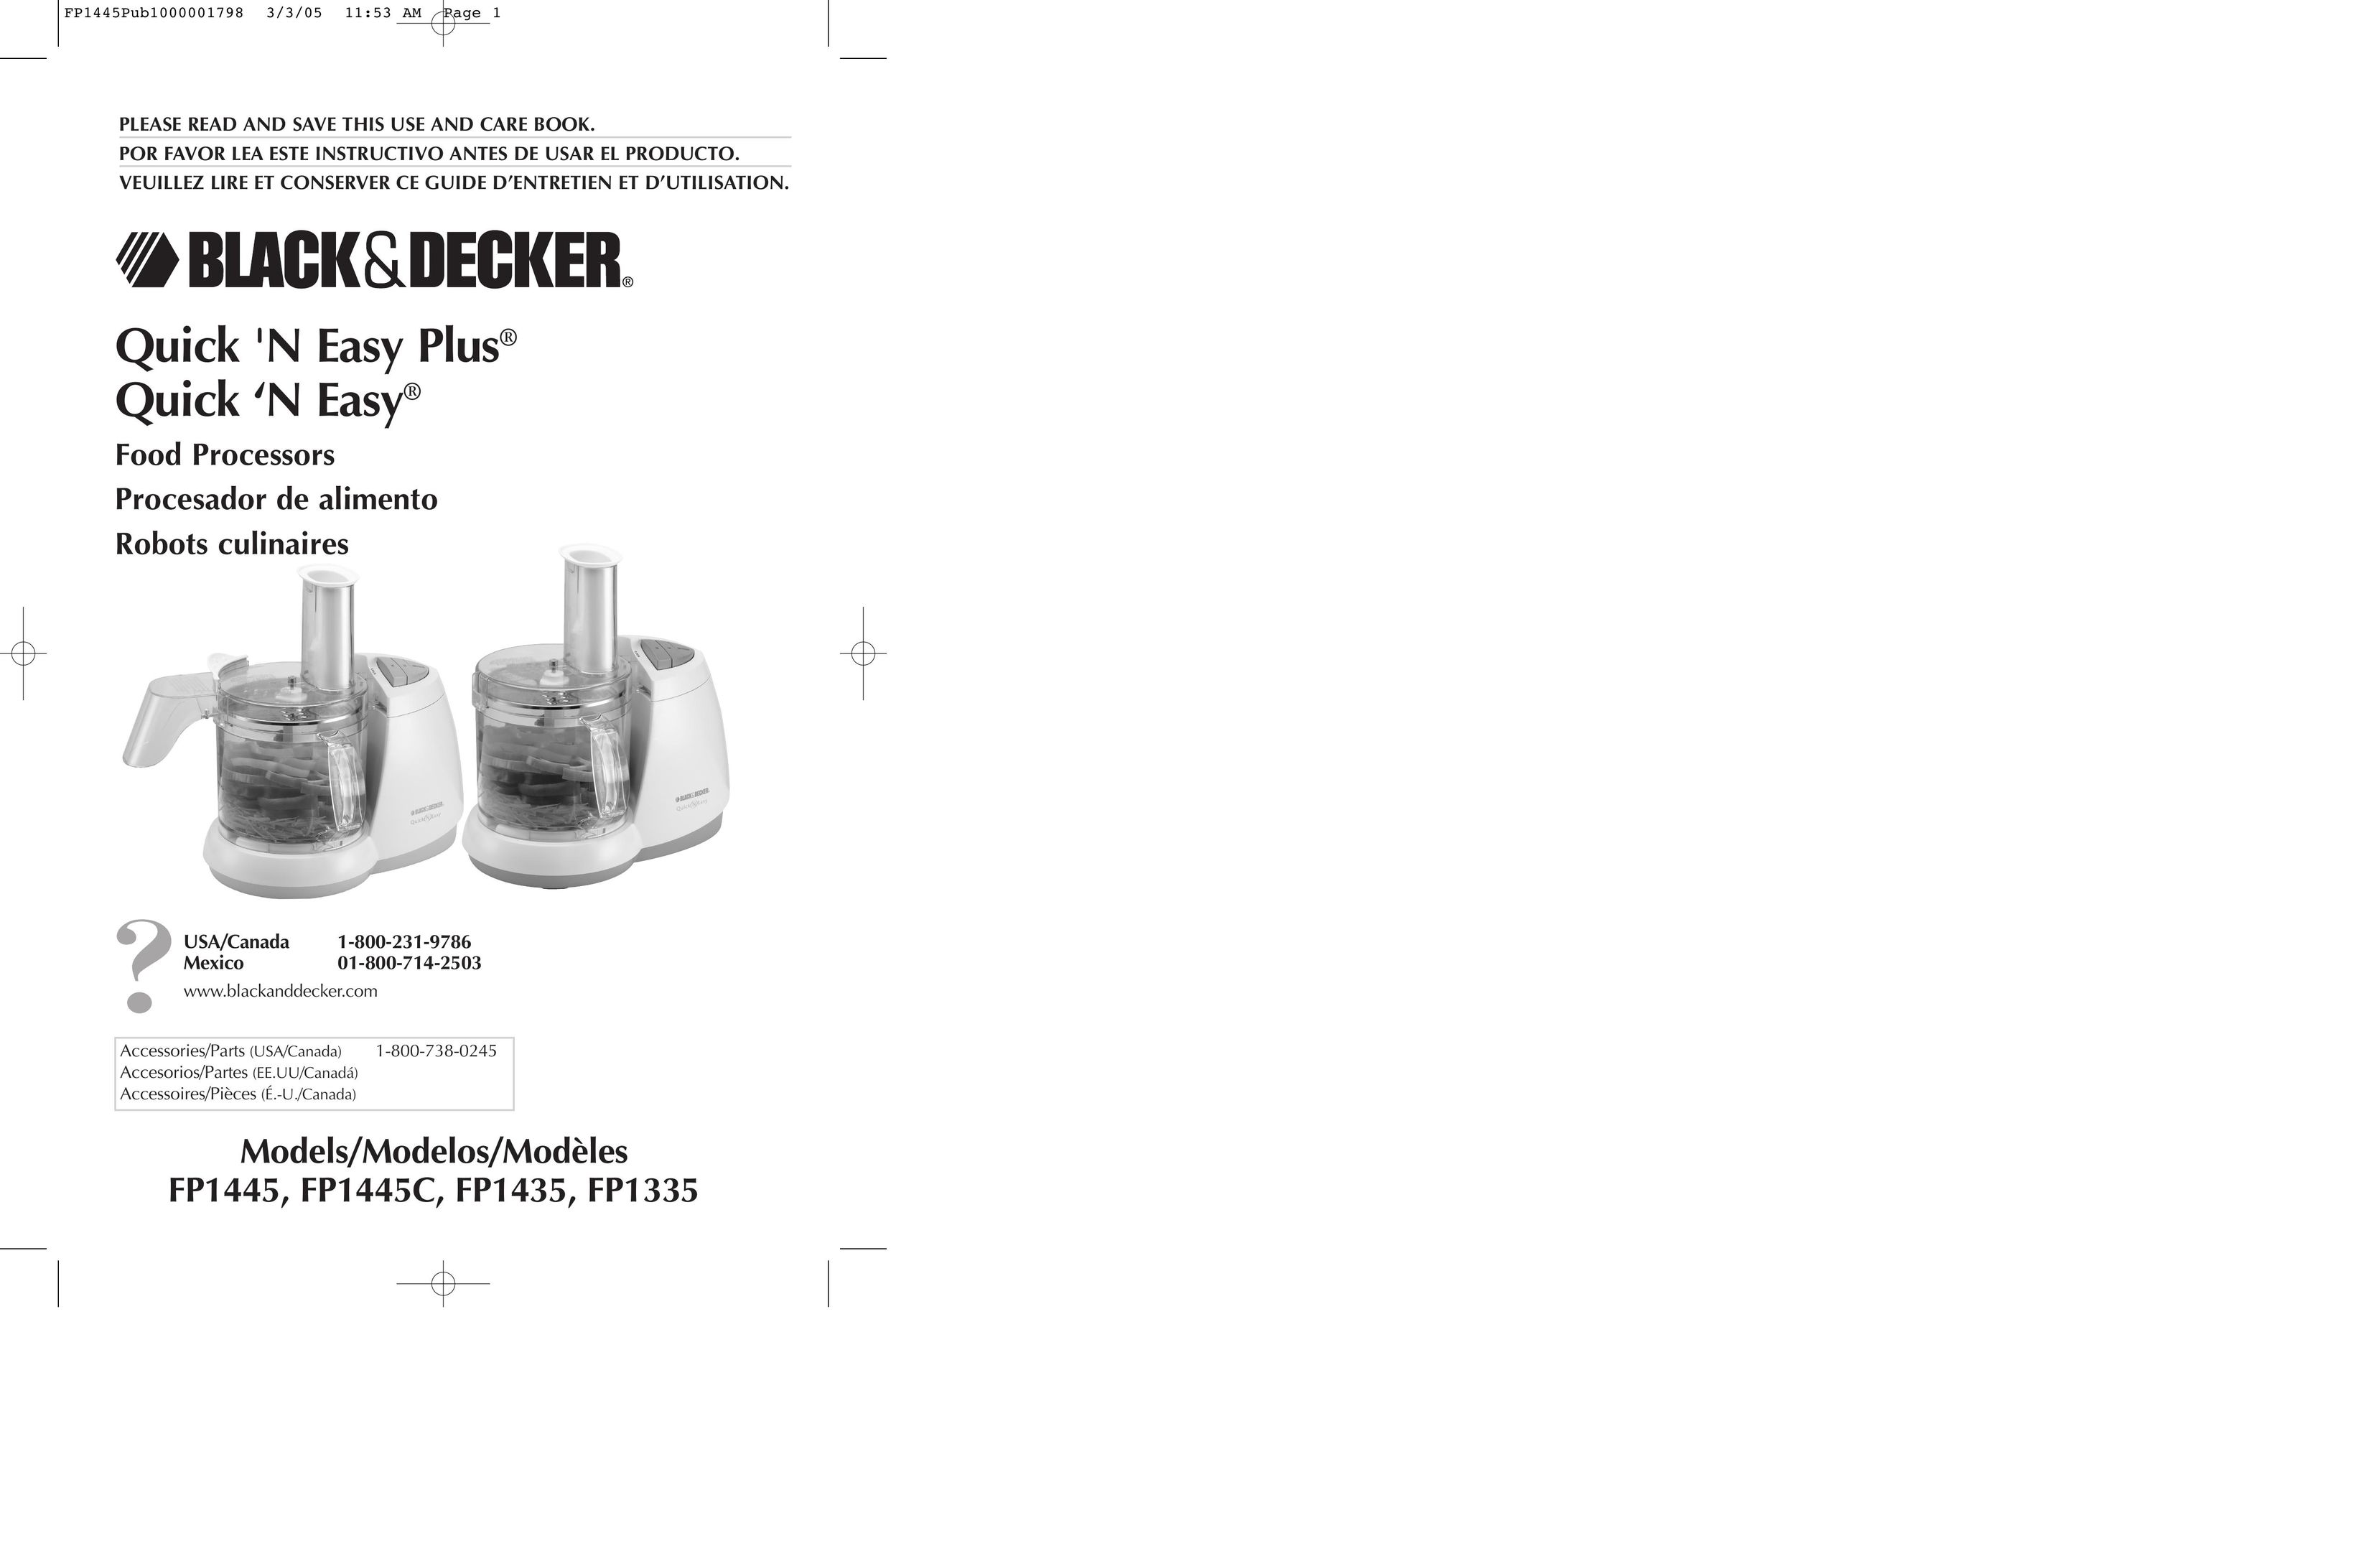 Black & Decker FP1445 Food Processor User Manual